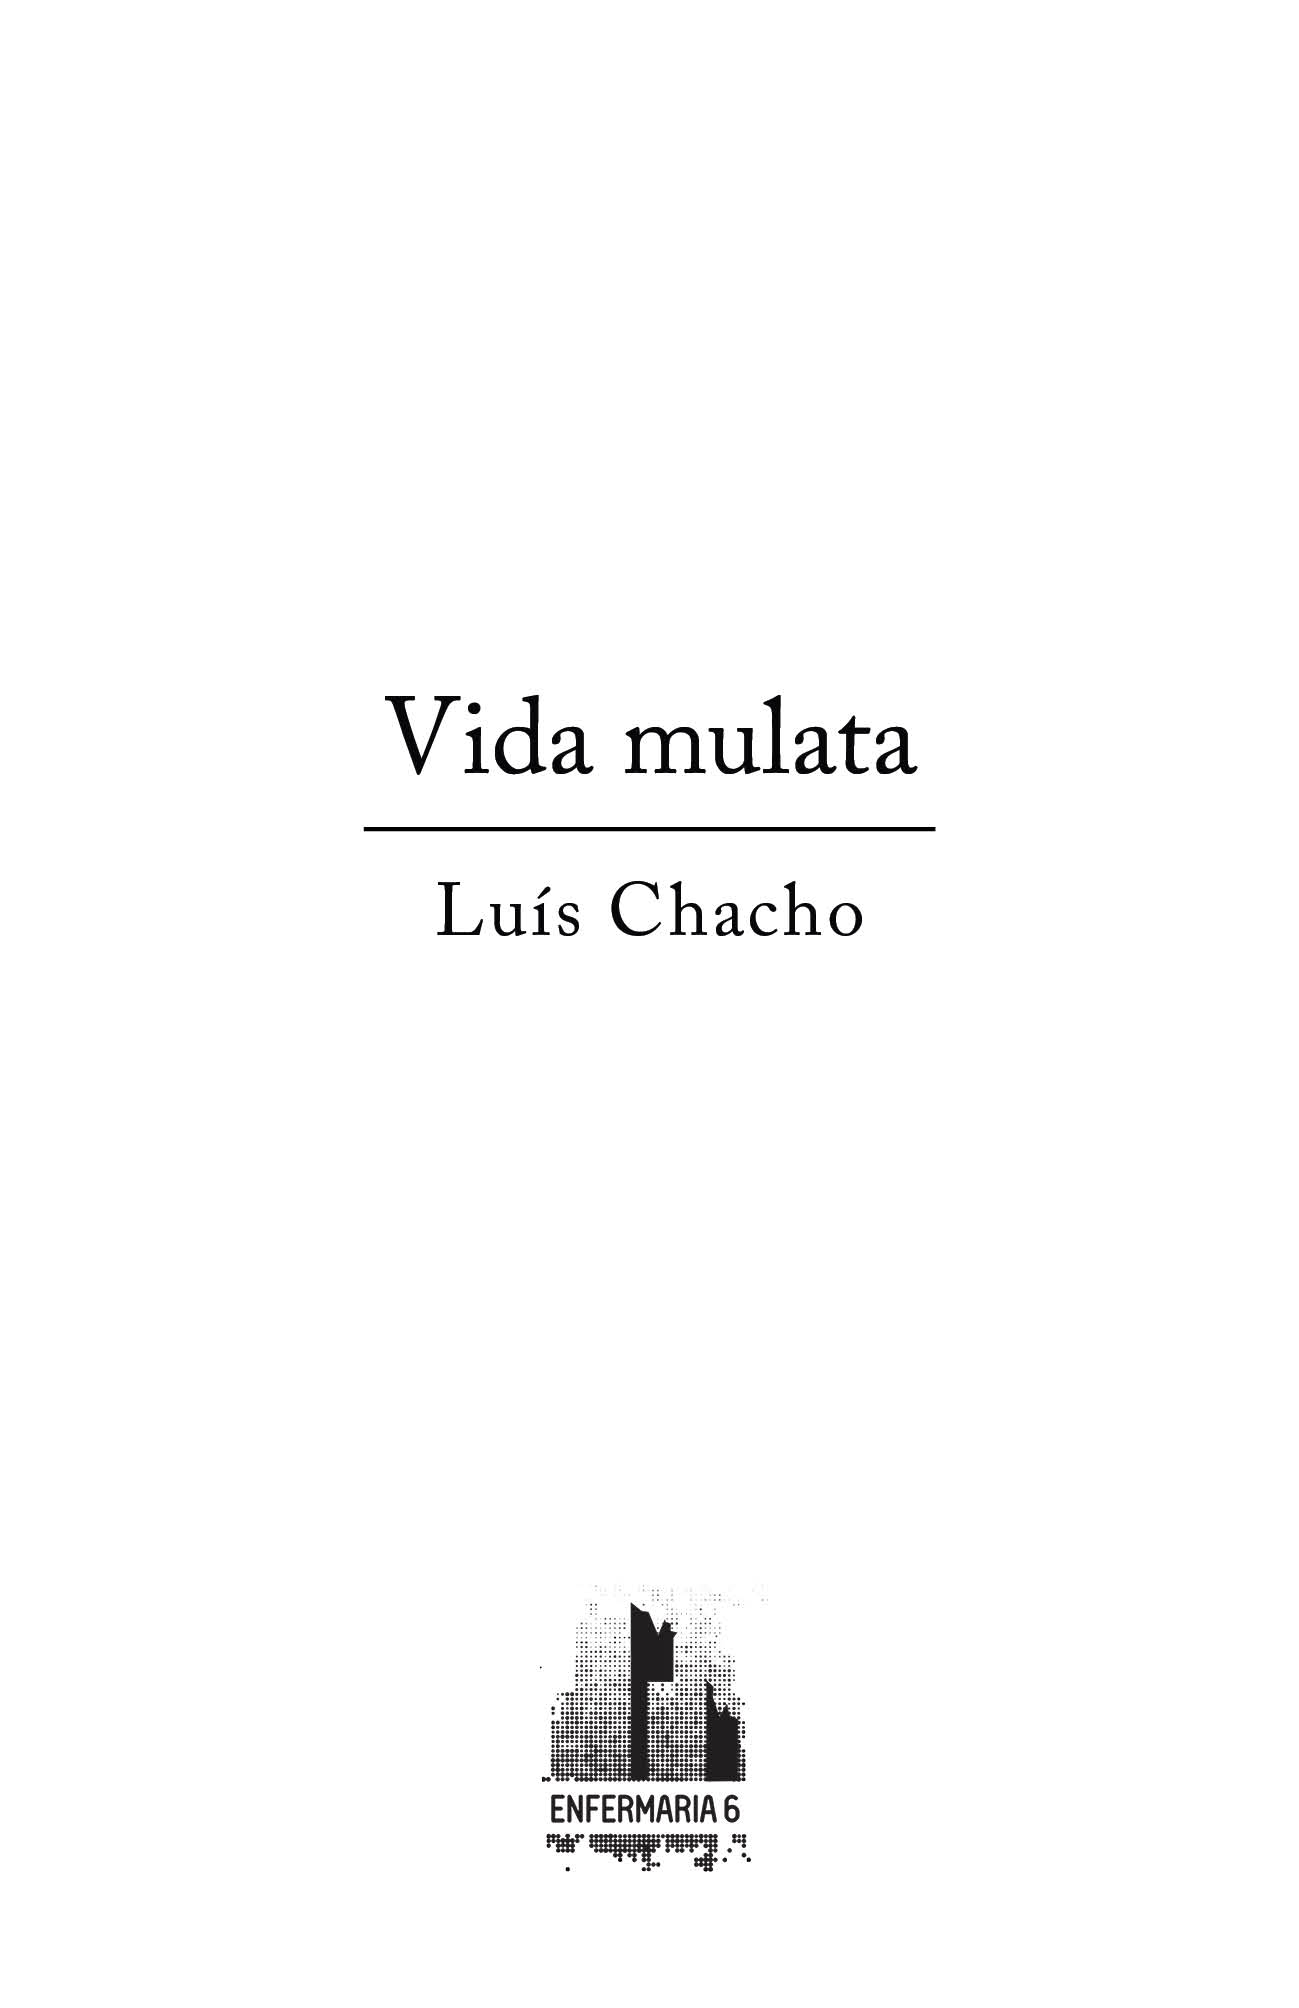 Luís Chacho, Vida mulata